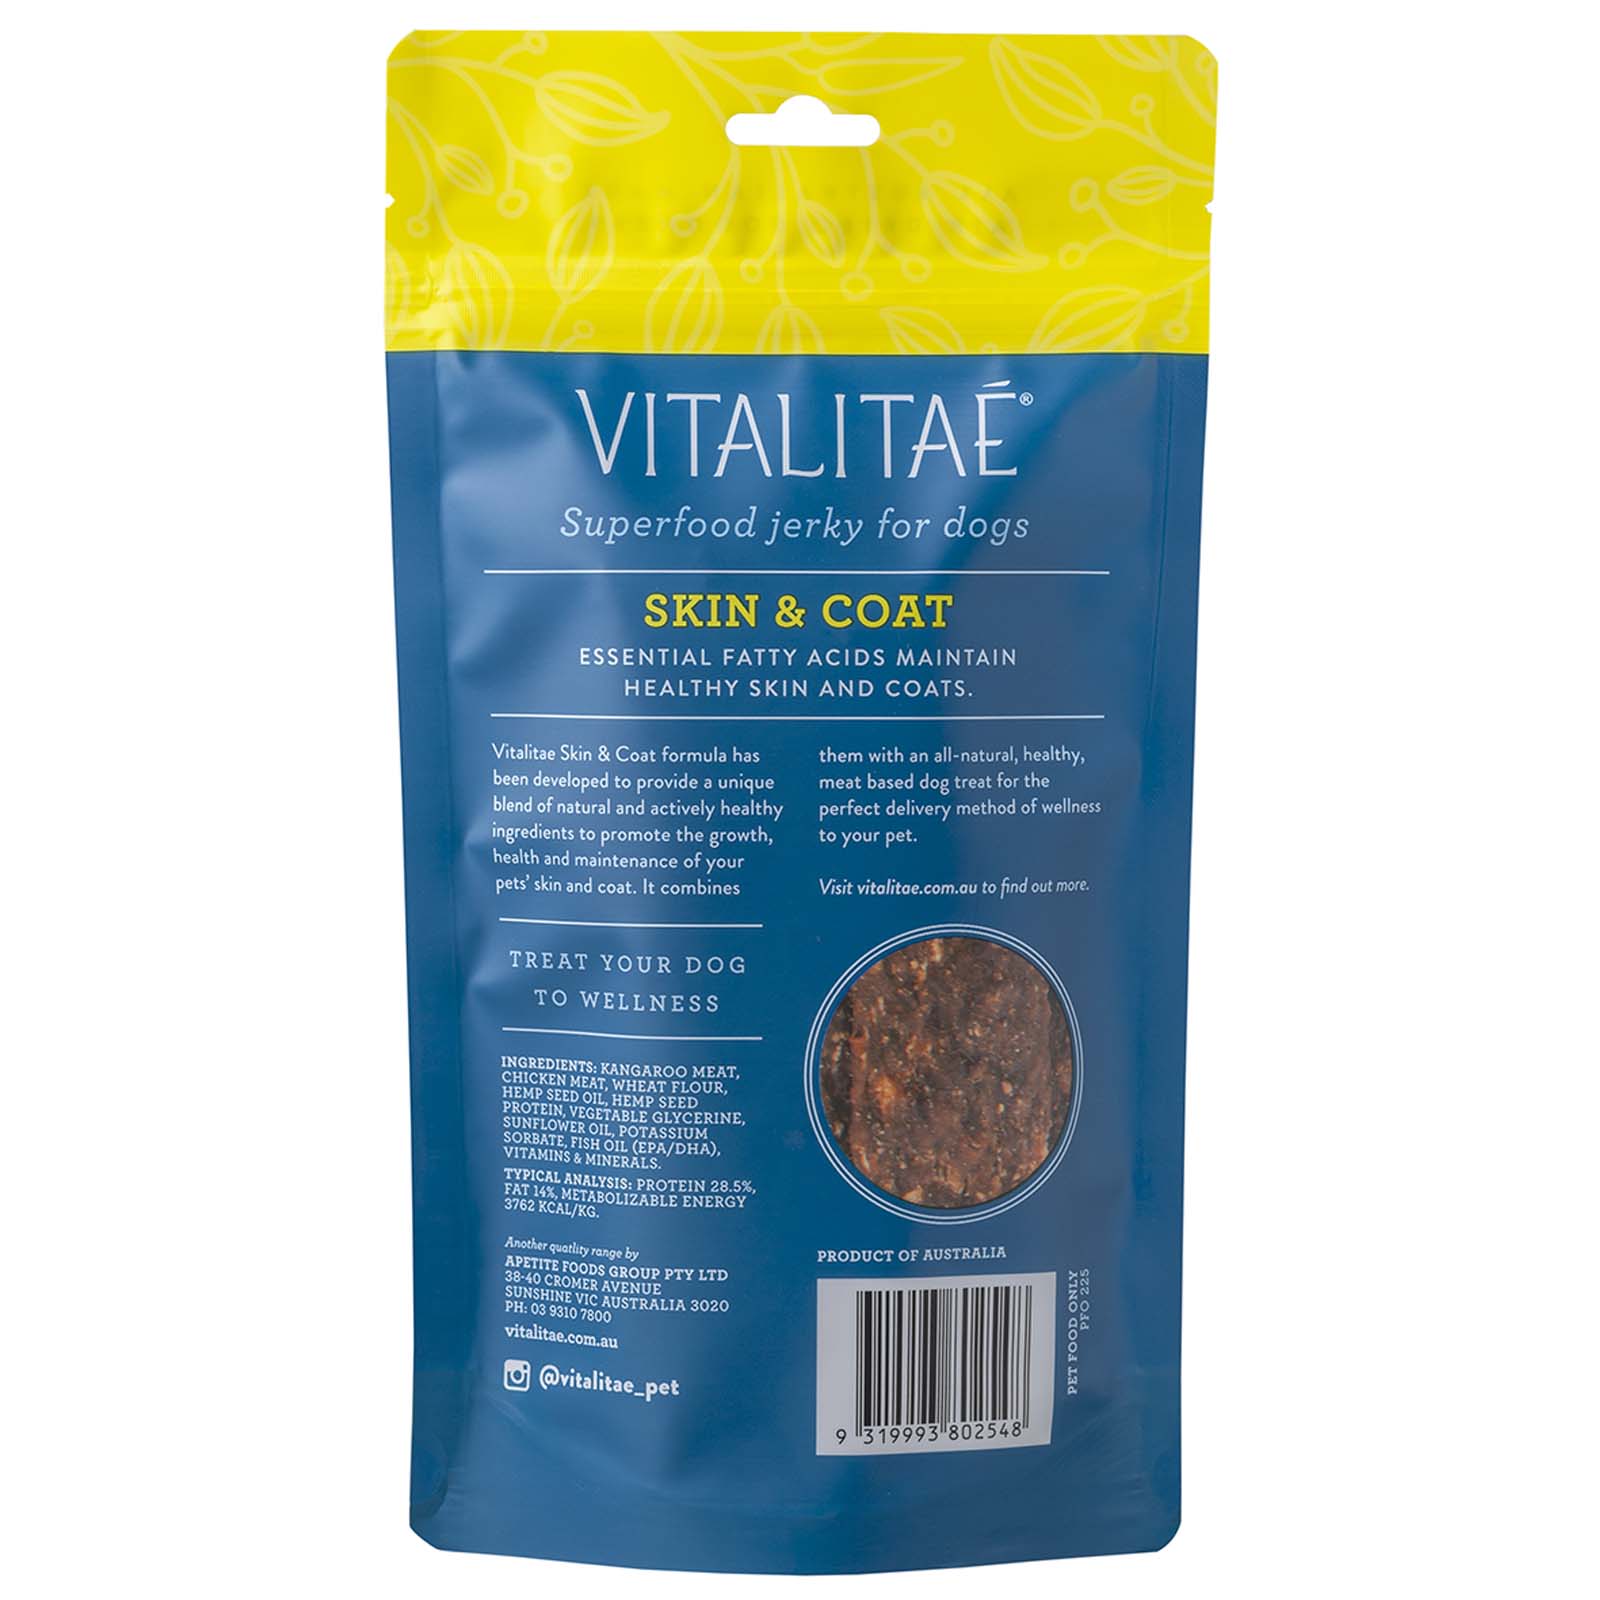 Vitalitae Superfood & Hemp Oil Dog Treats - Skin & Coat Jerky - 150g image 0